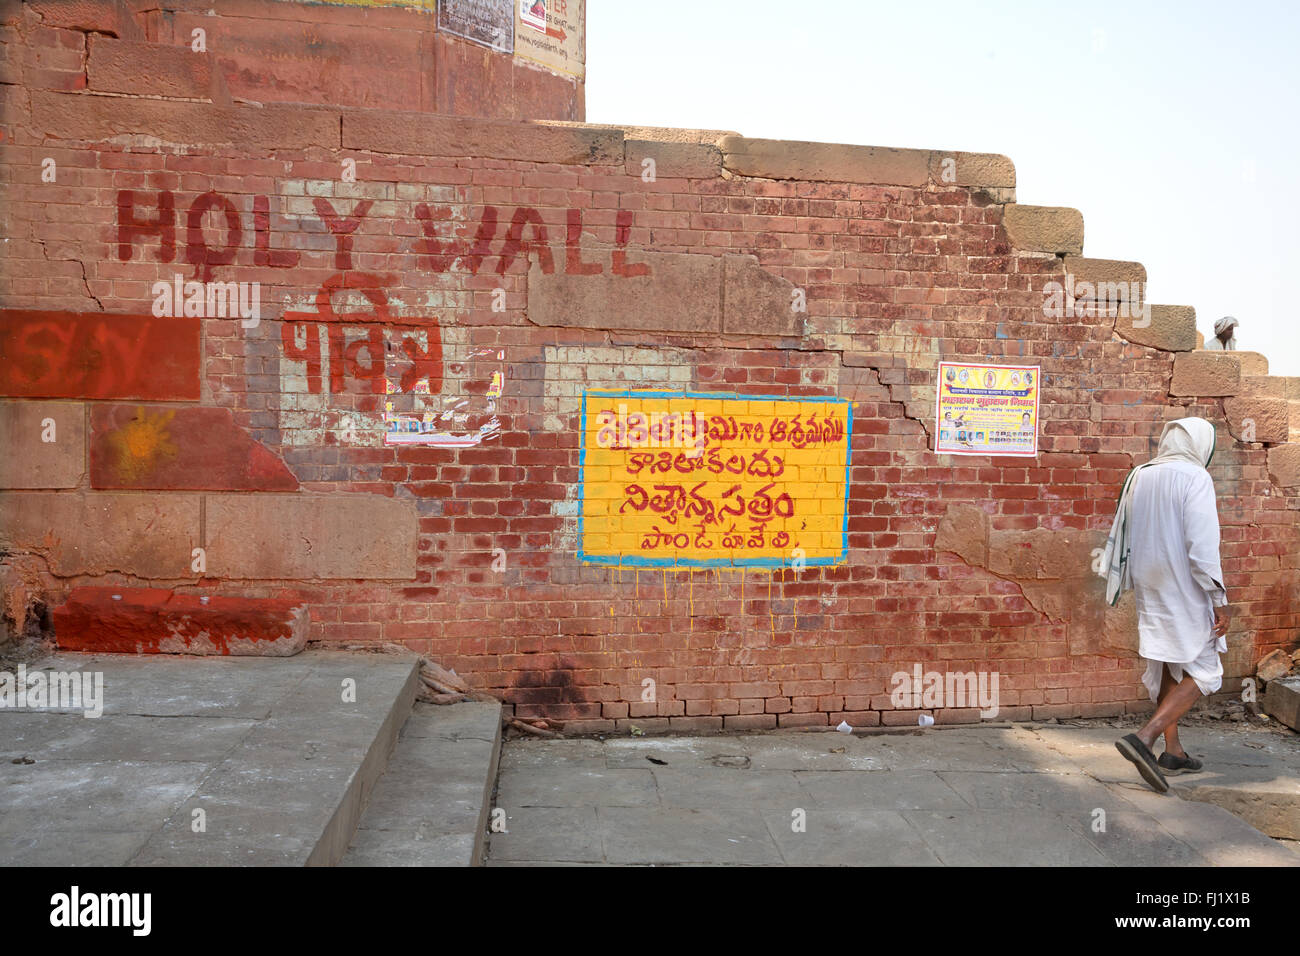 A man walks alone along a wall with 'Holy wall' writing in holy city Varanasi, India Stock Photo